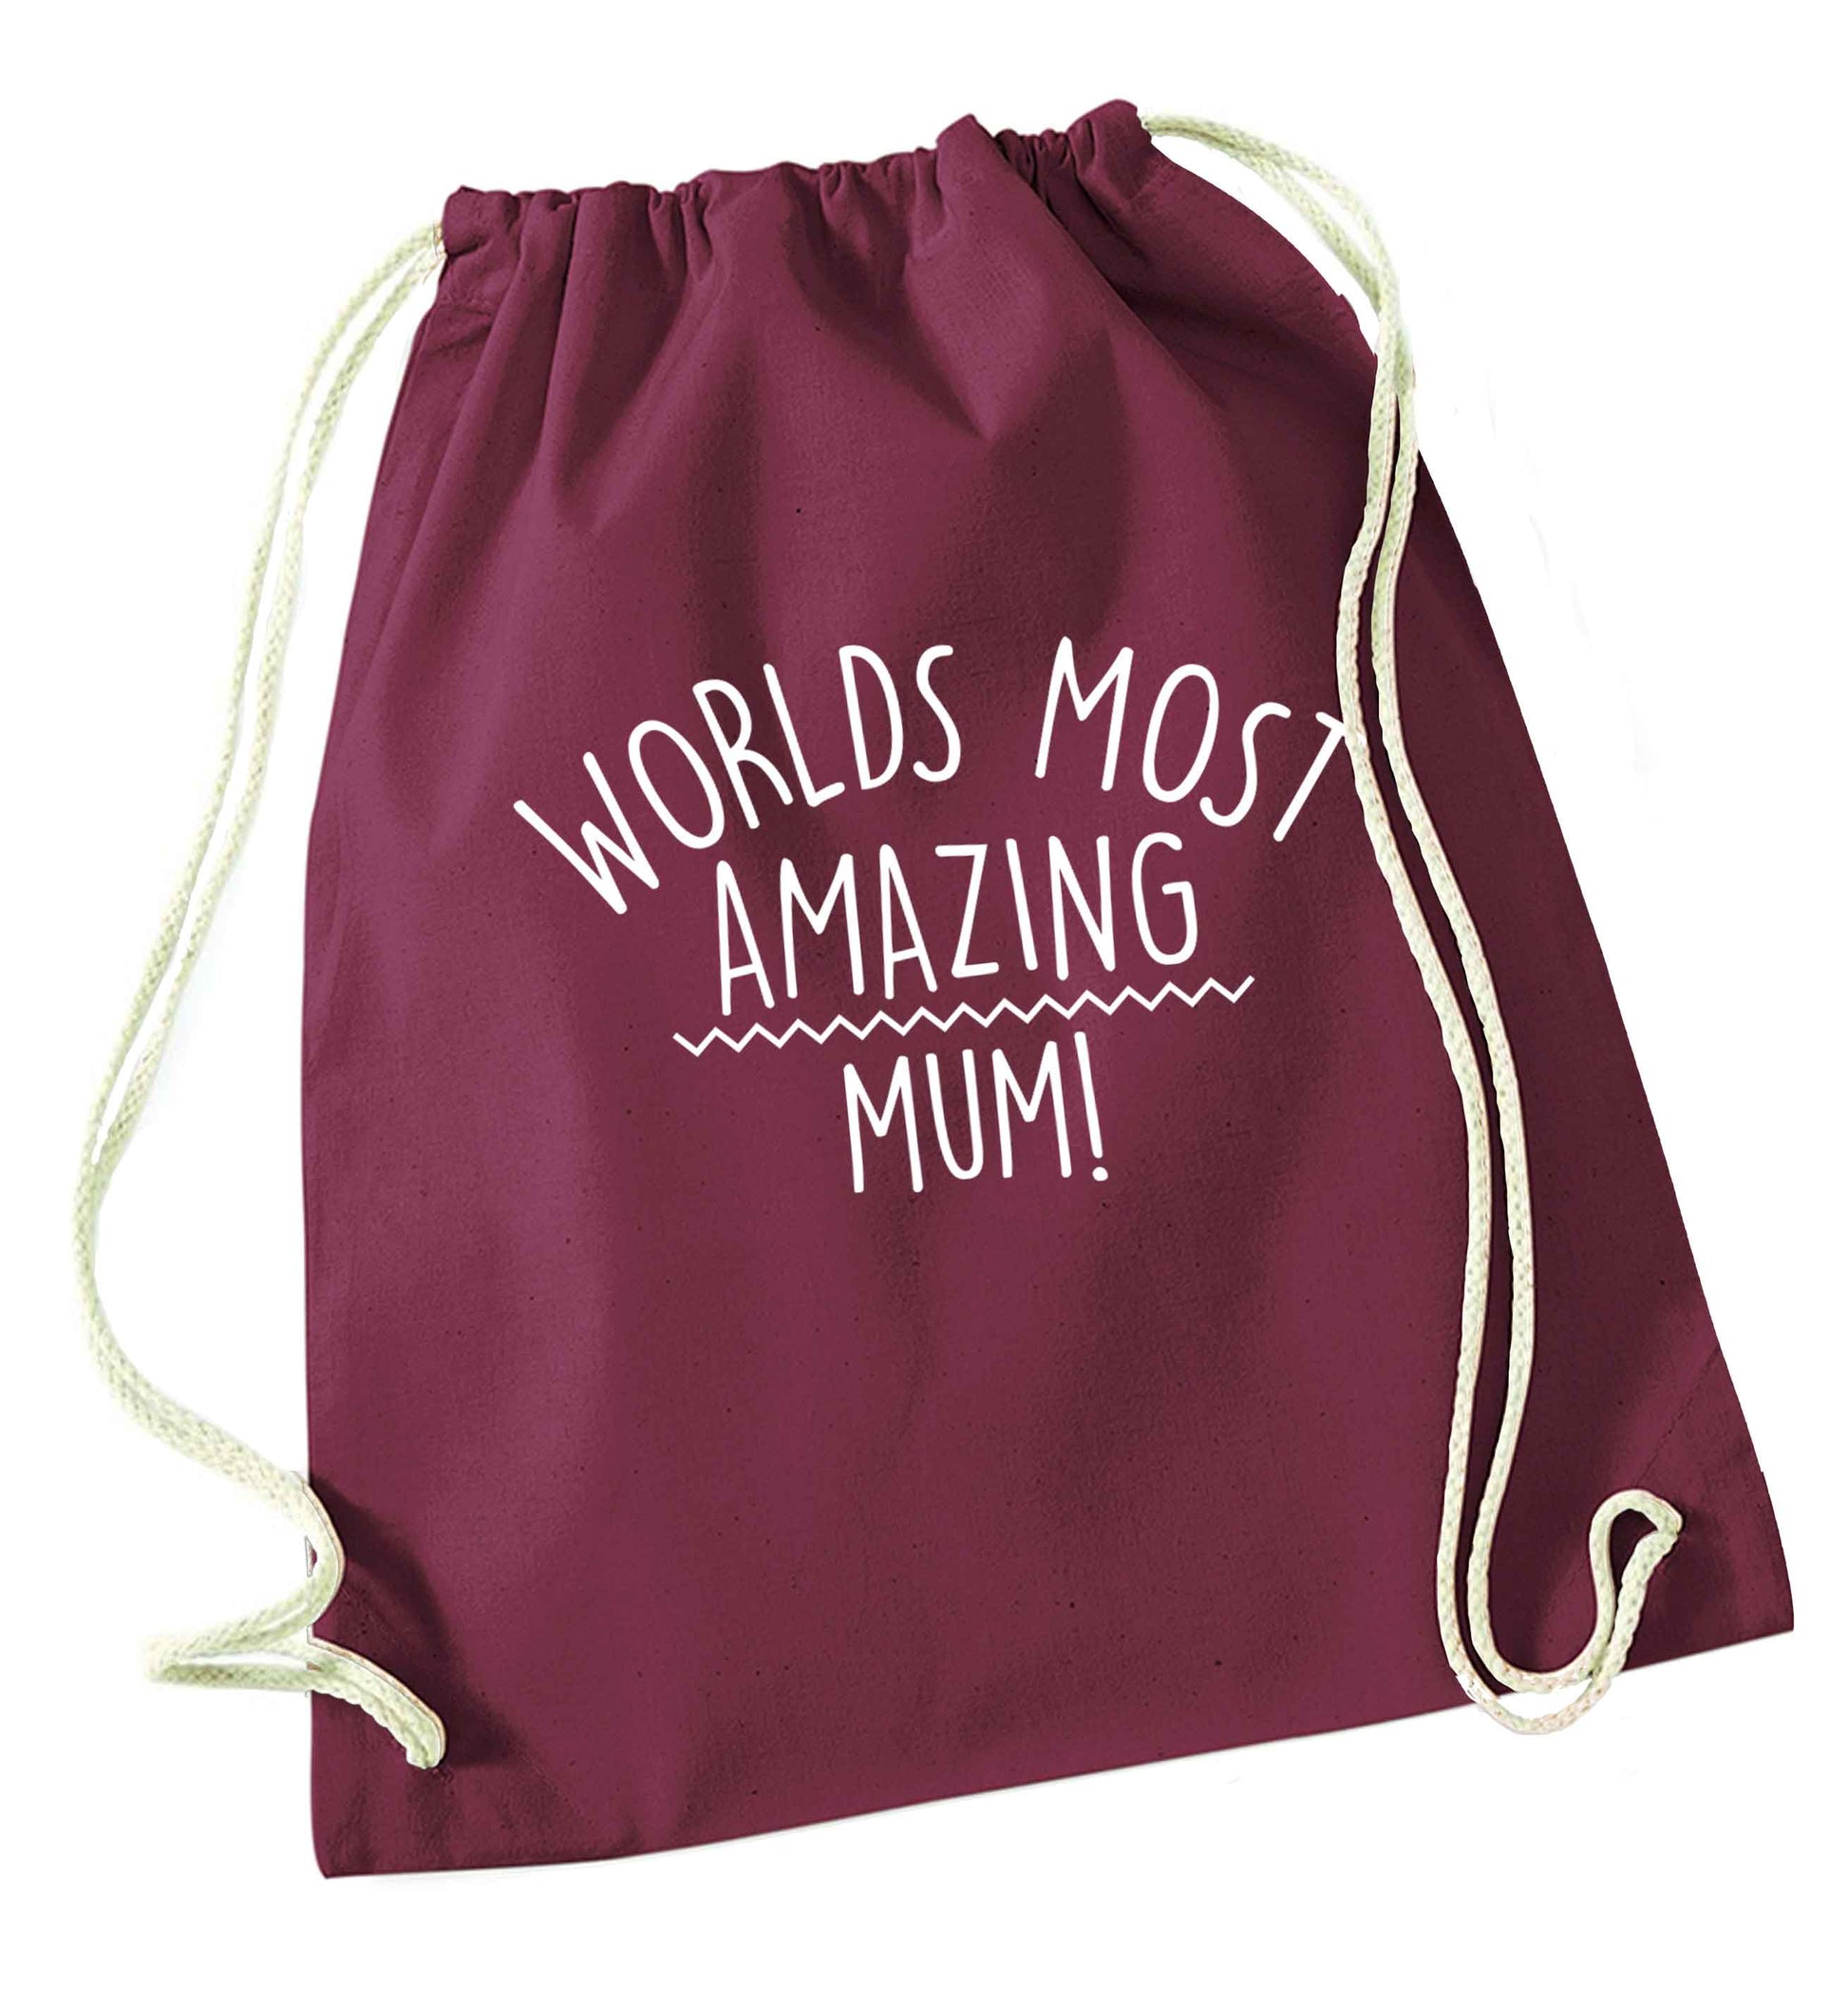 Worlds most amazing mum maroon drawstring bag